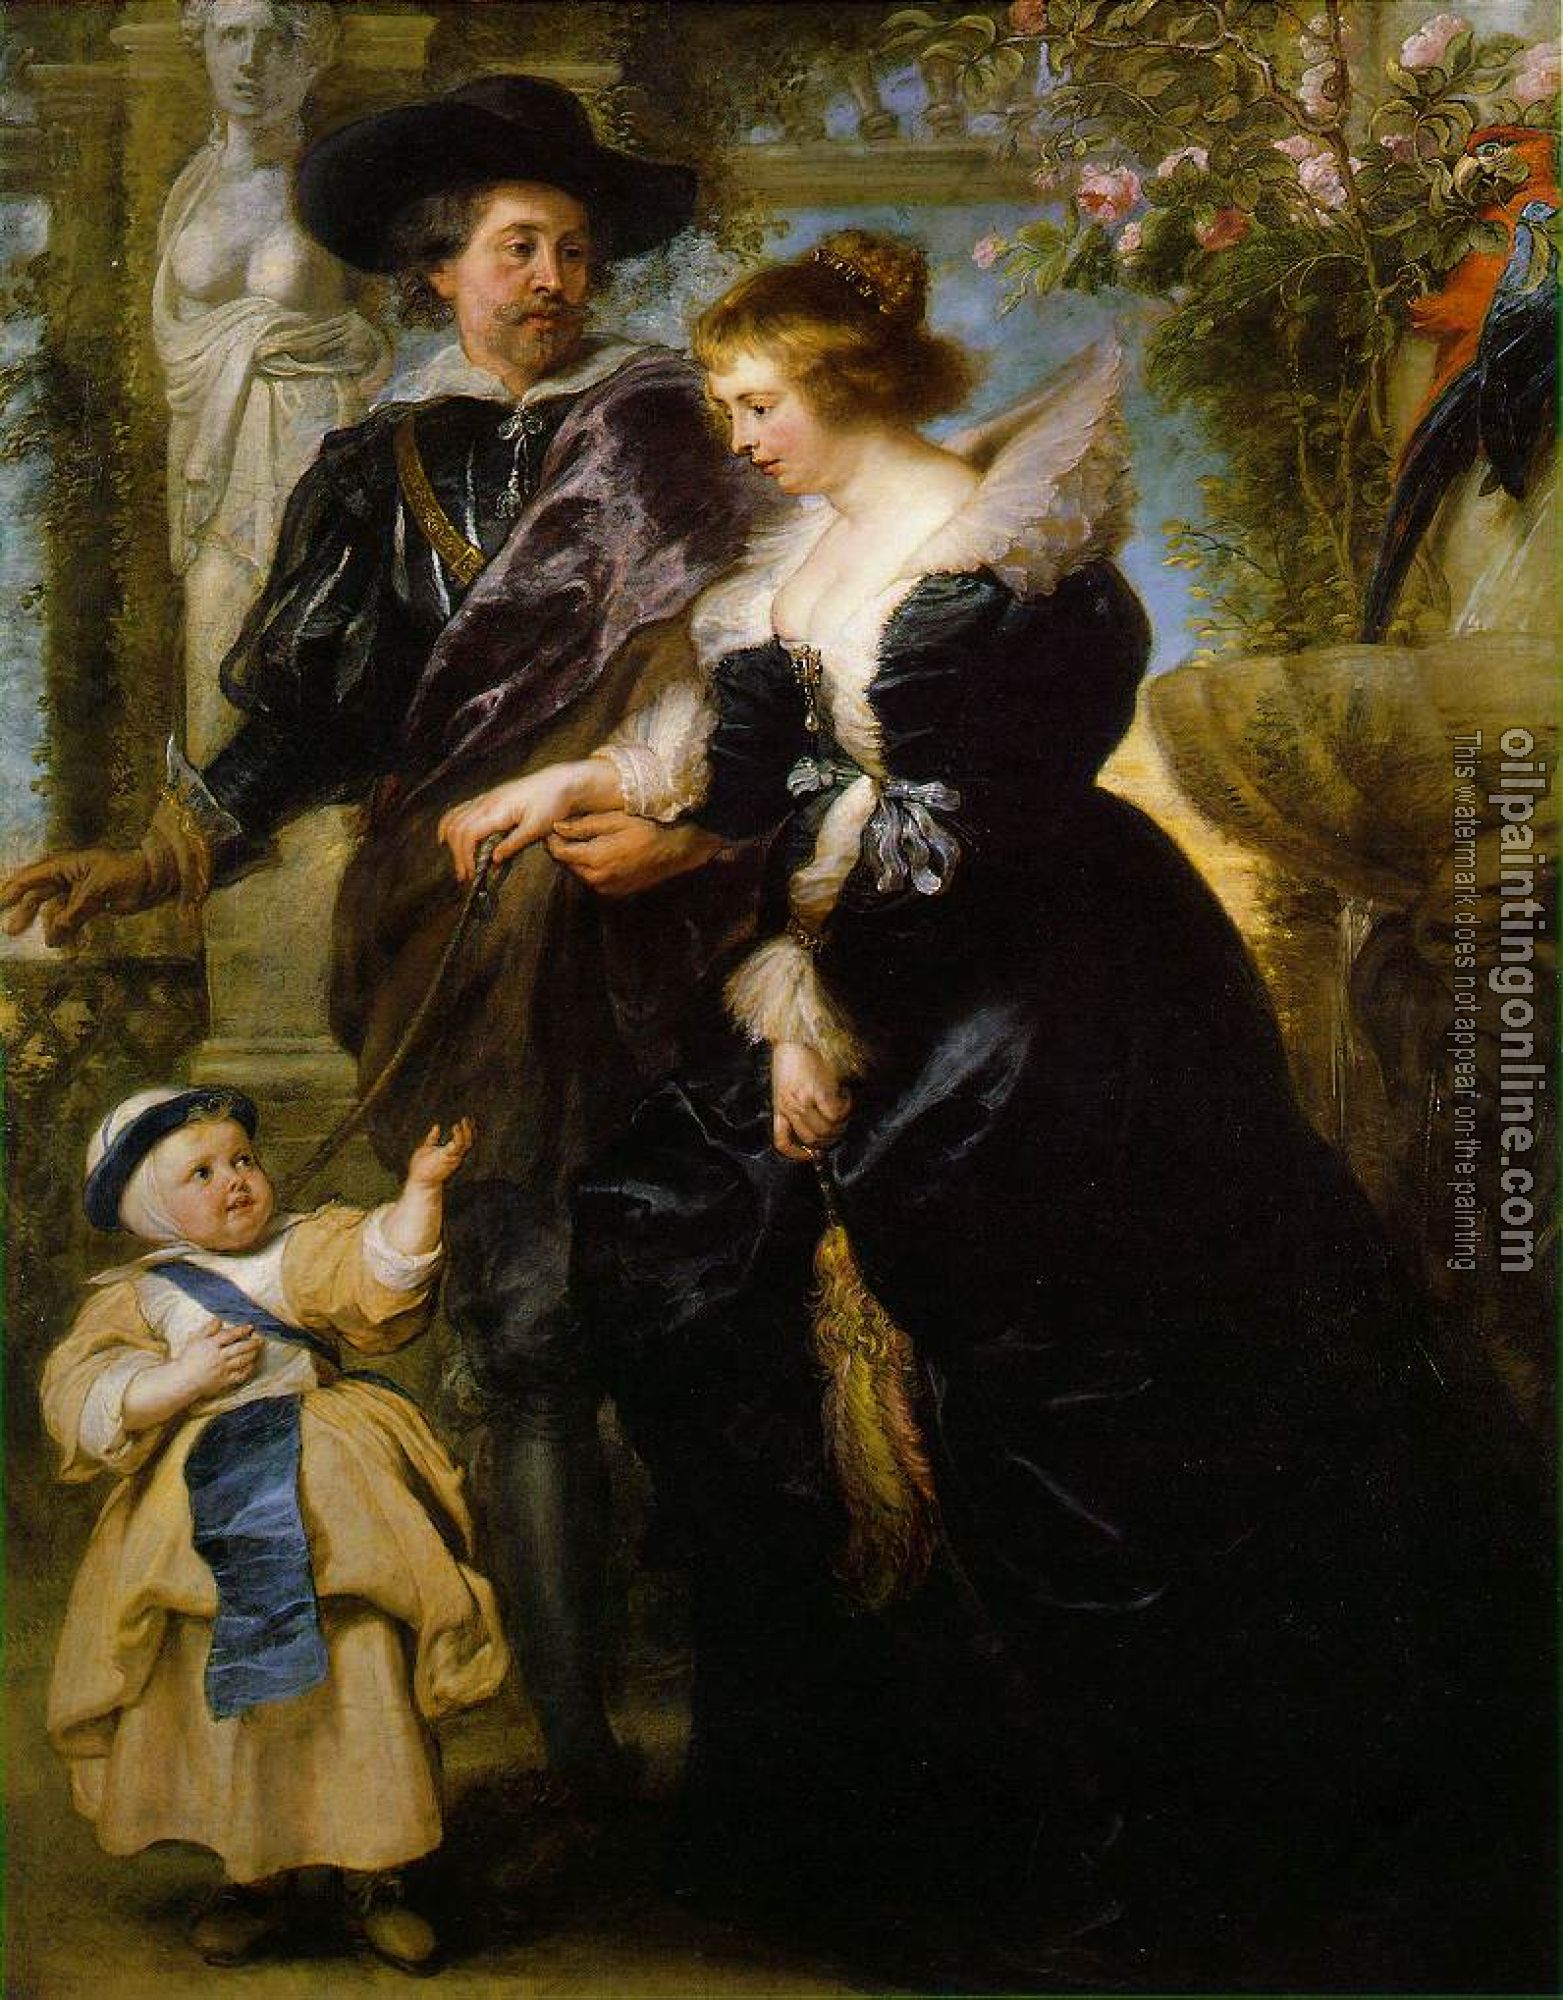 Rubens, Peter Paul - Rubens, his wife Helena Fourment, and their son Peter Paul